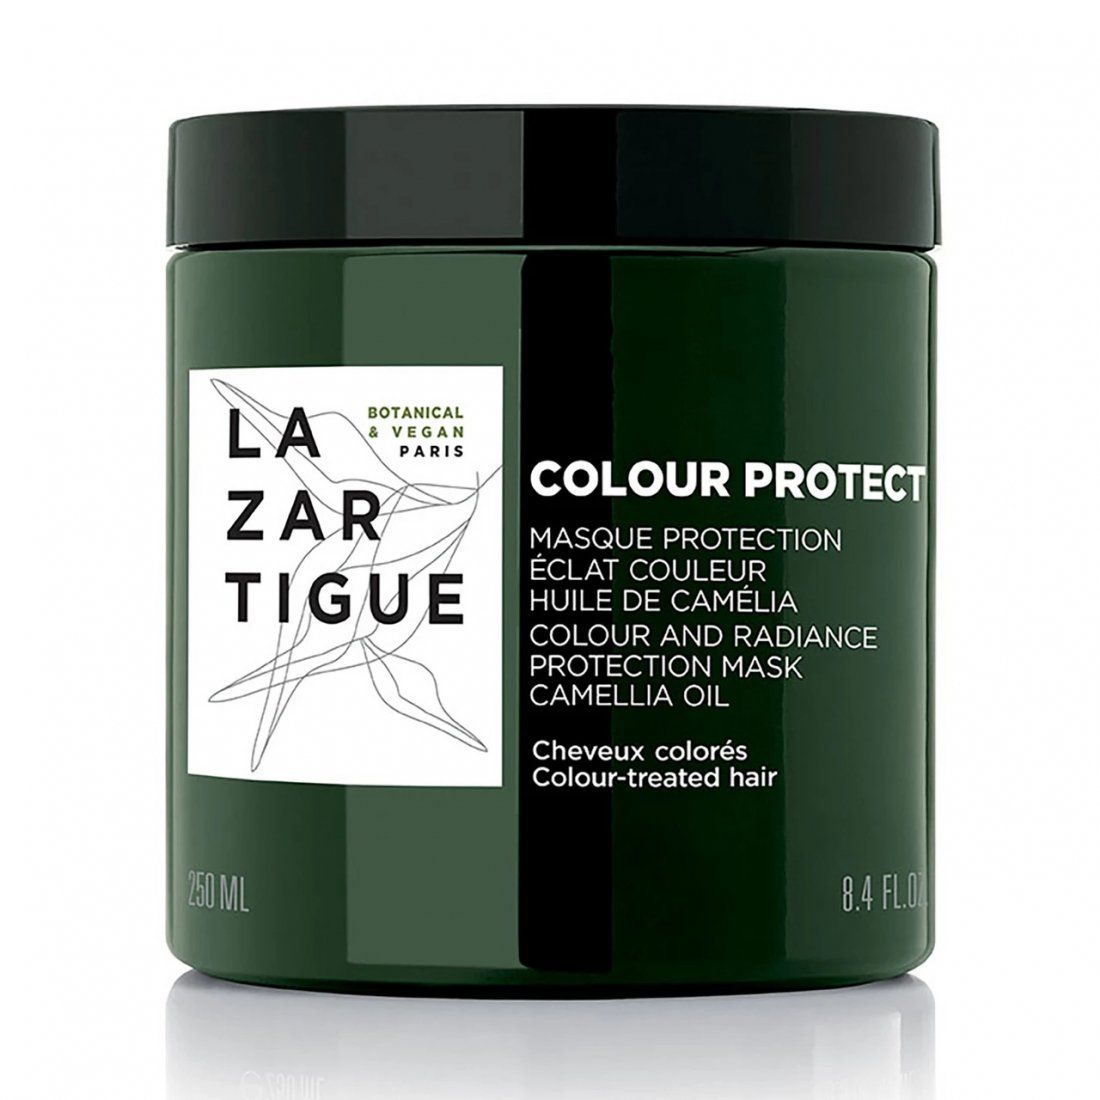 Lazartigue - Après-shampoing 'Colour Protect' - 250 ml